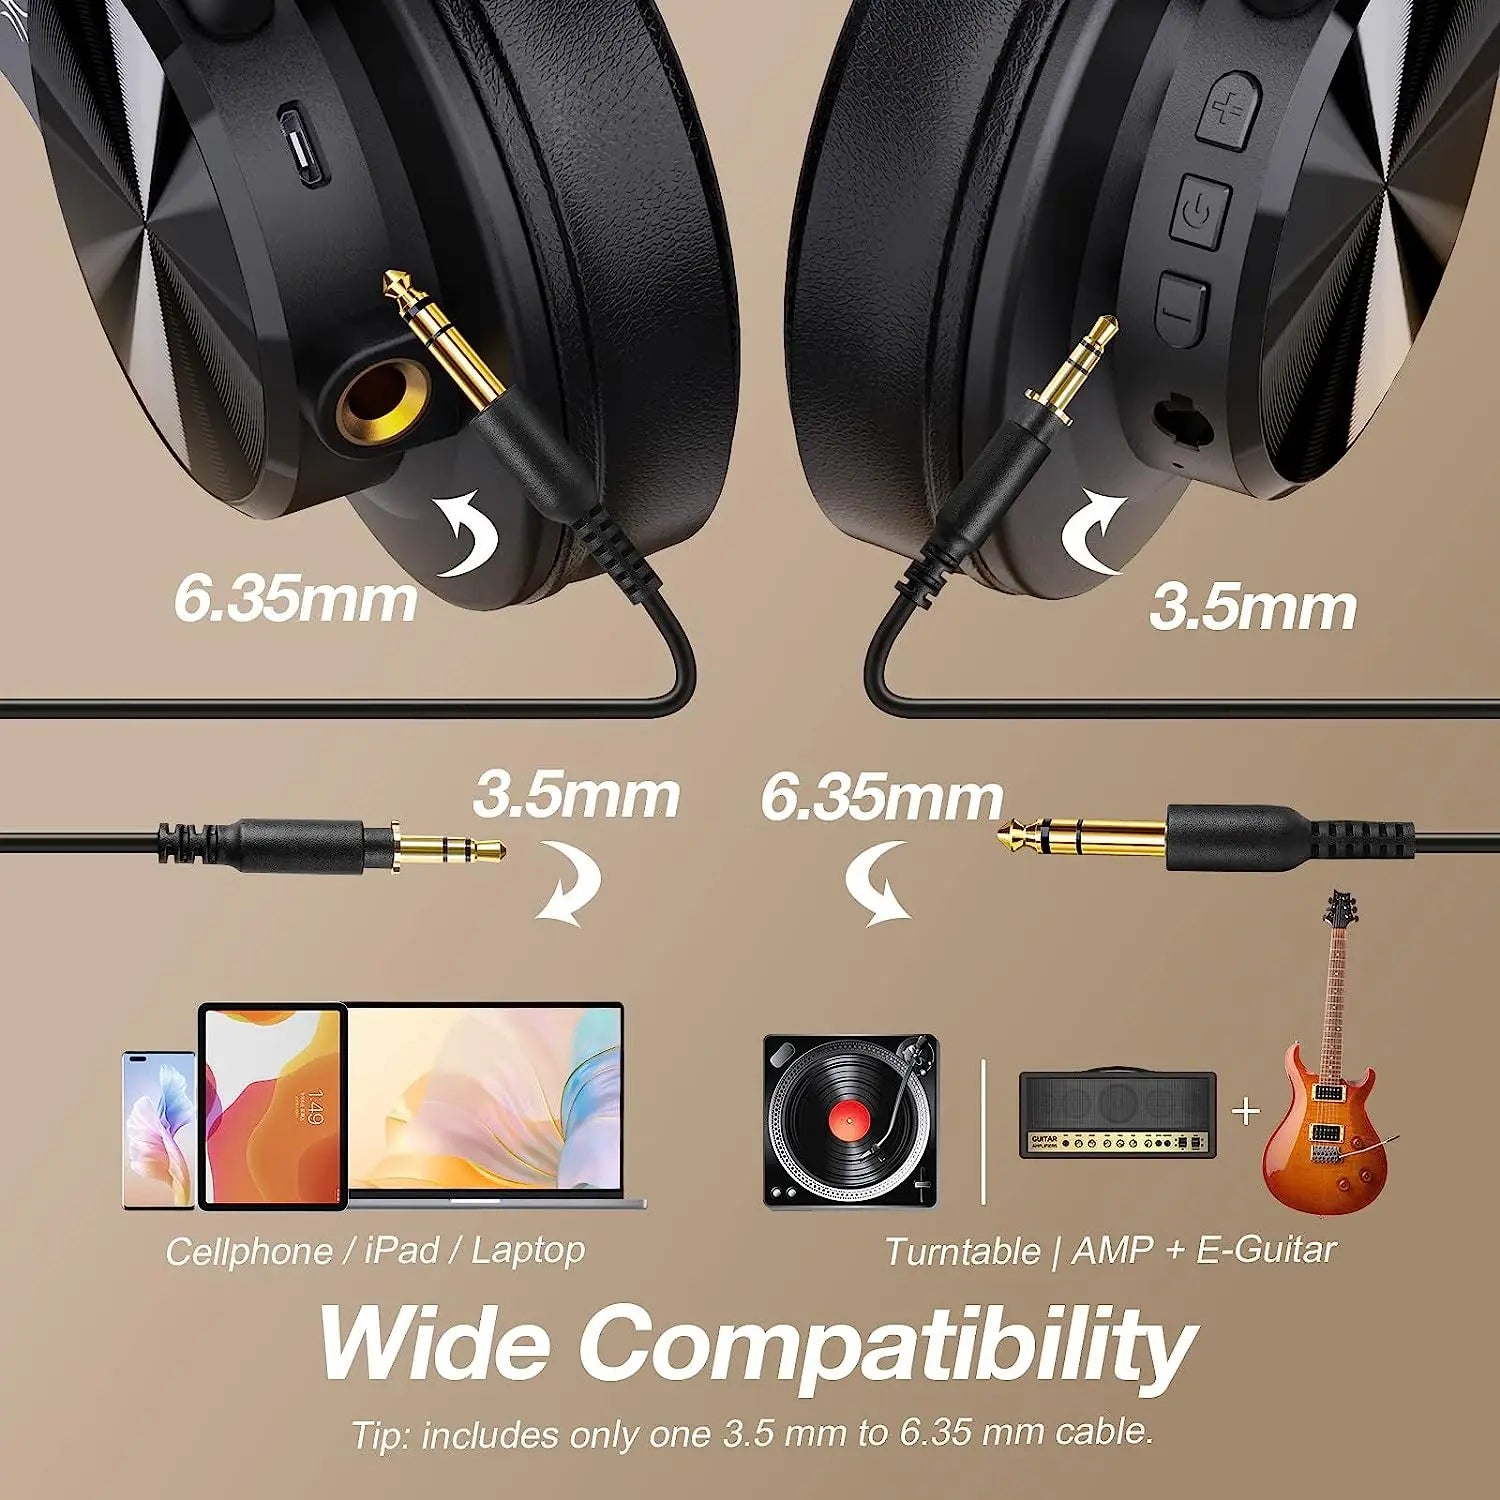 Oneodio Fusion A70 Bluetooth 5.2 Headphones Hi-Res Audio Over Ear Wireless Headset Professional Studio Monitor DJ Headphones 72H LUXLIFE BRANDS